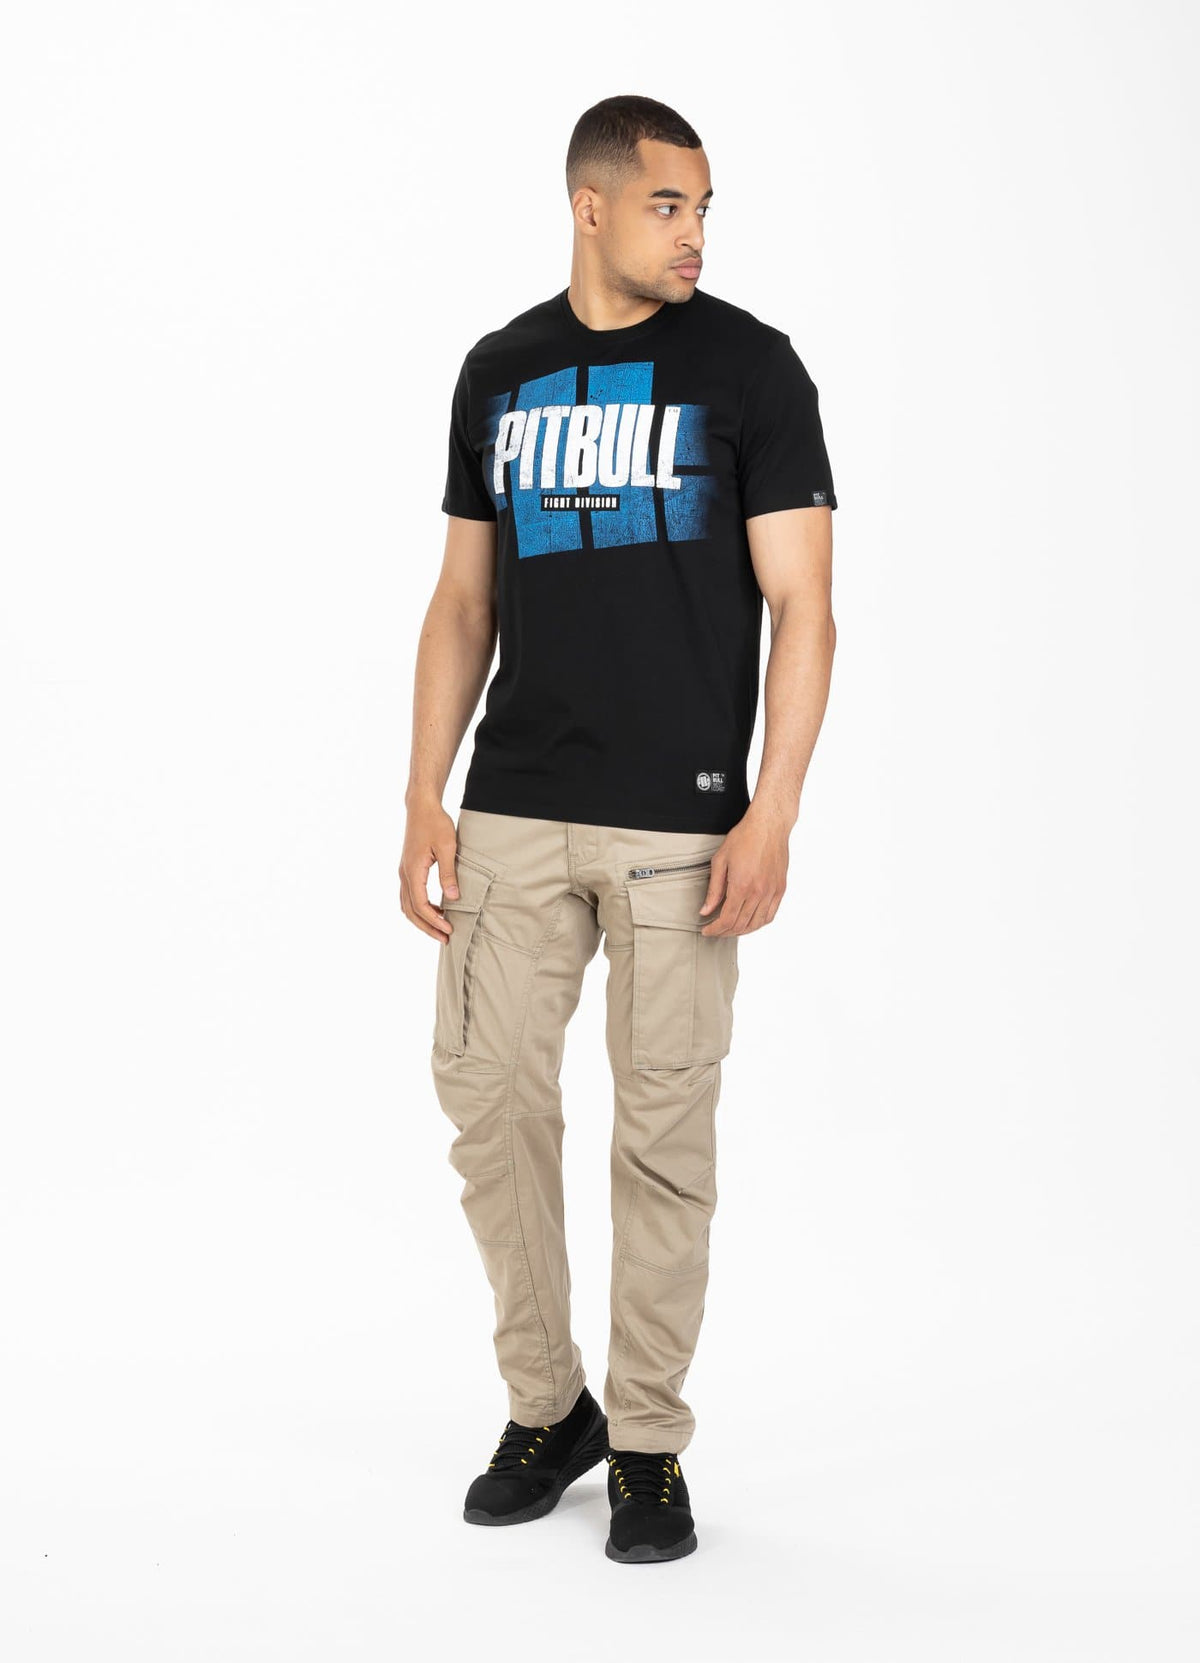 T-shirt VALE TUDO Black - Pitbull West Coast International Store 